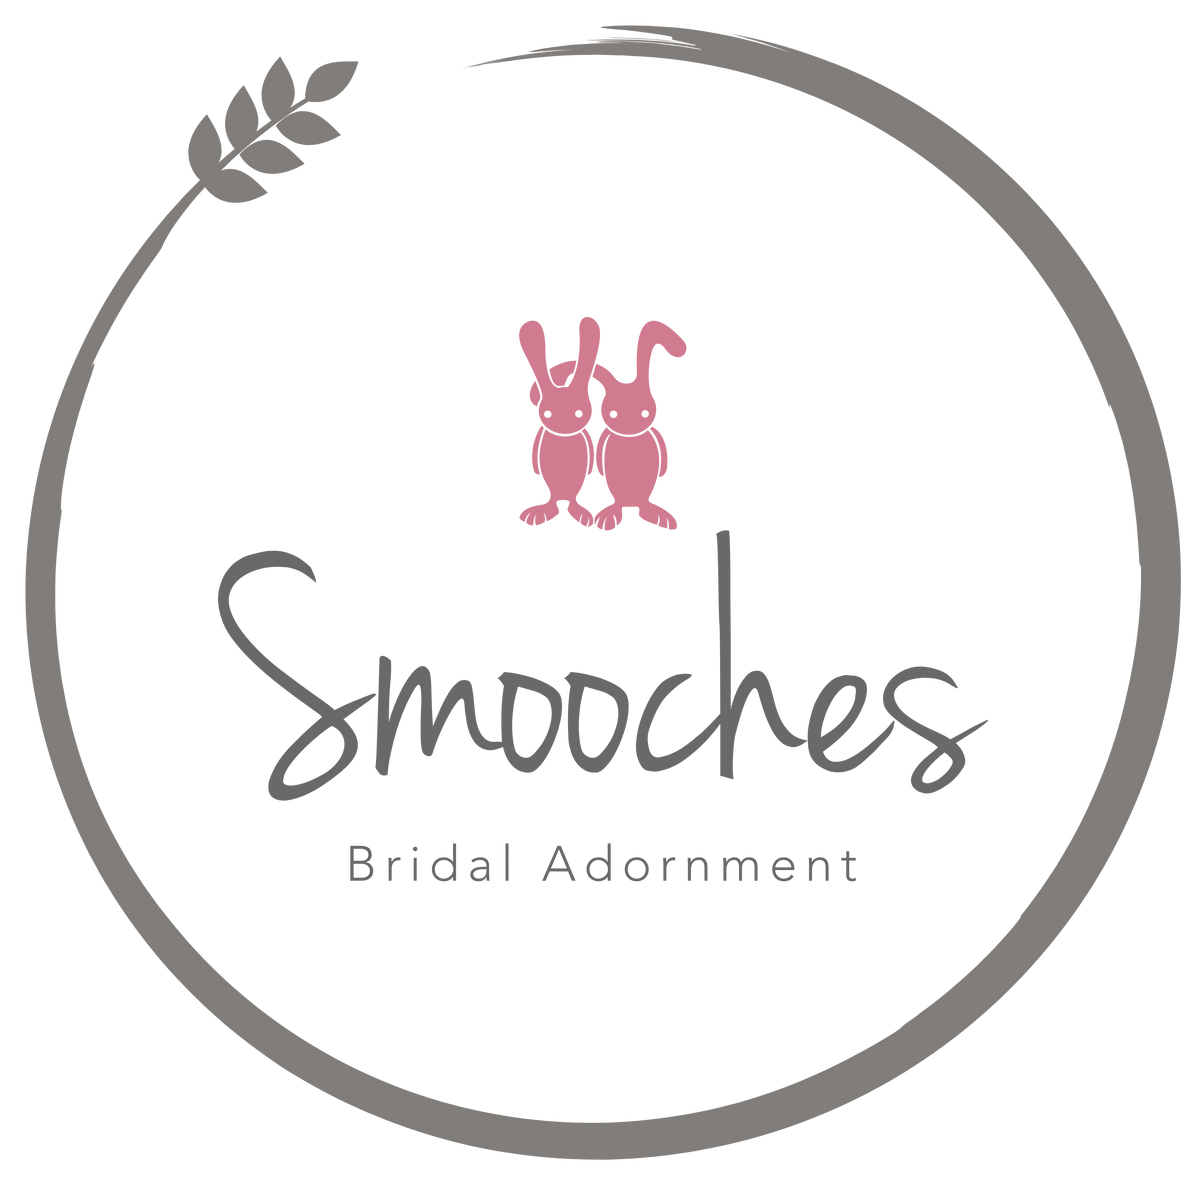 Smooches Bridal